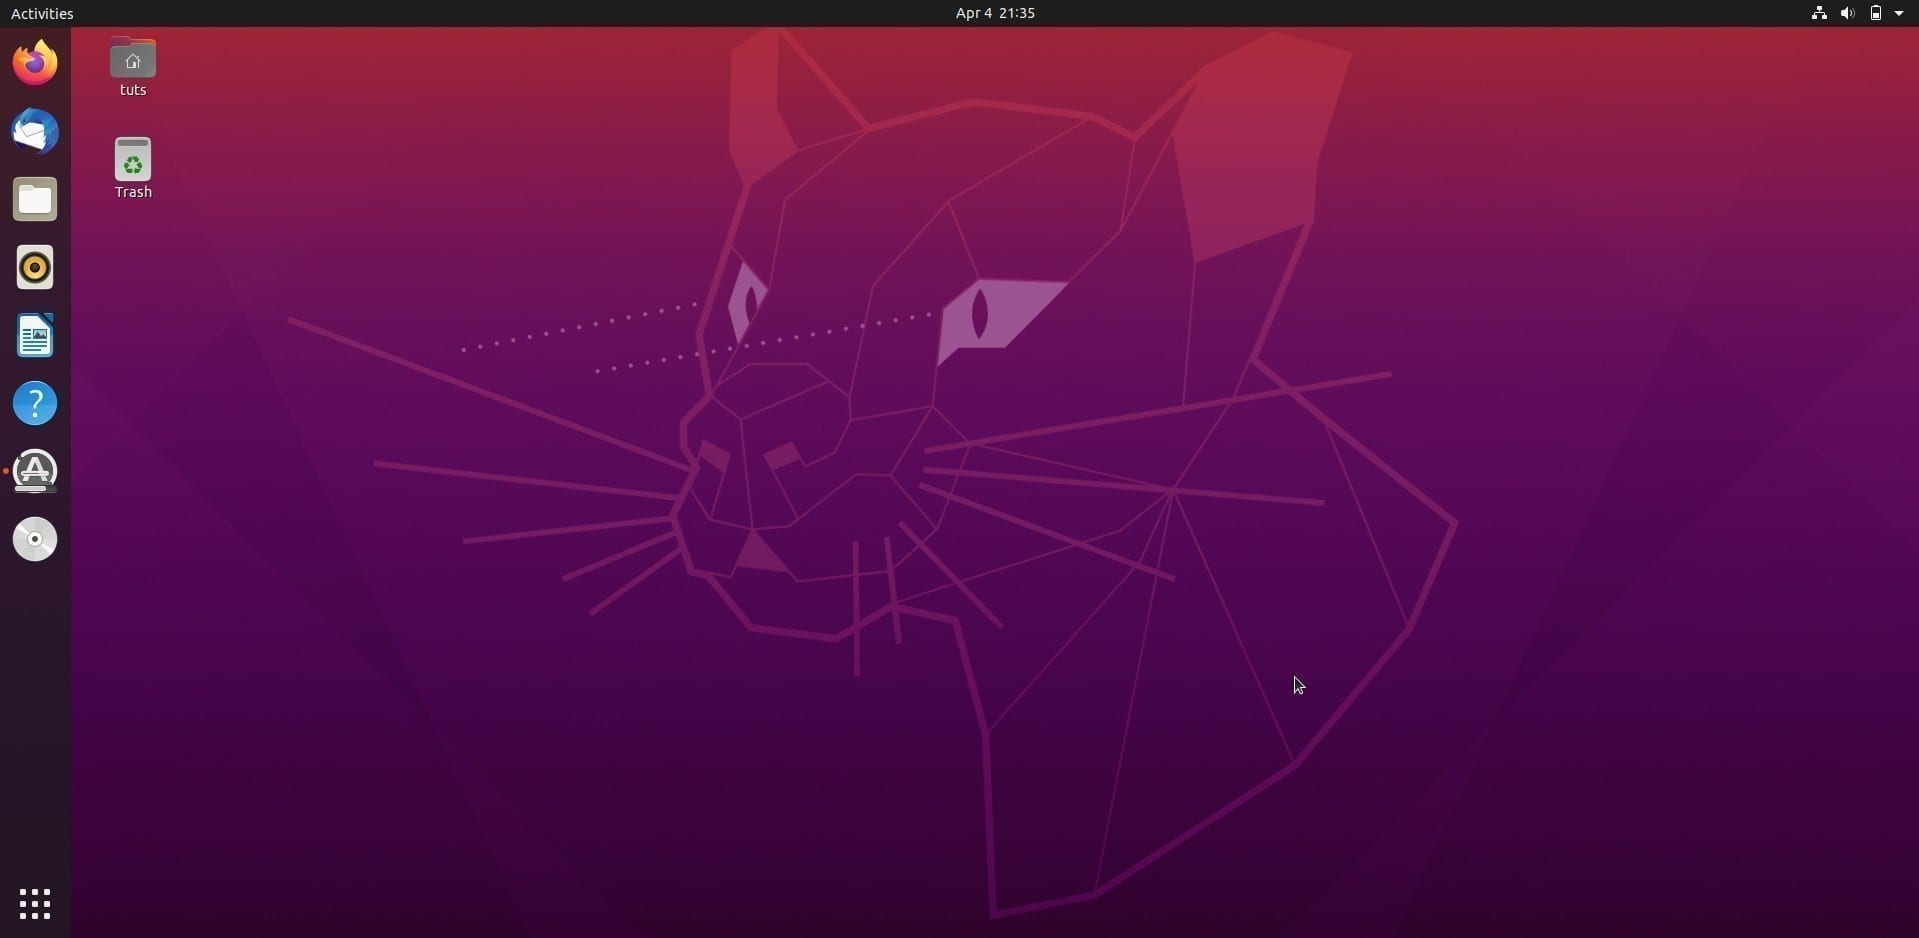 Ubuntu 20.04 LTS Focal Fossa Desktop